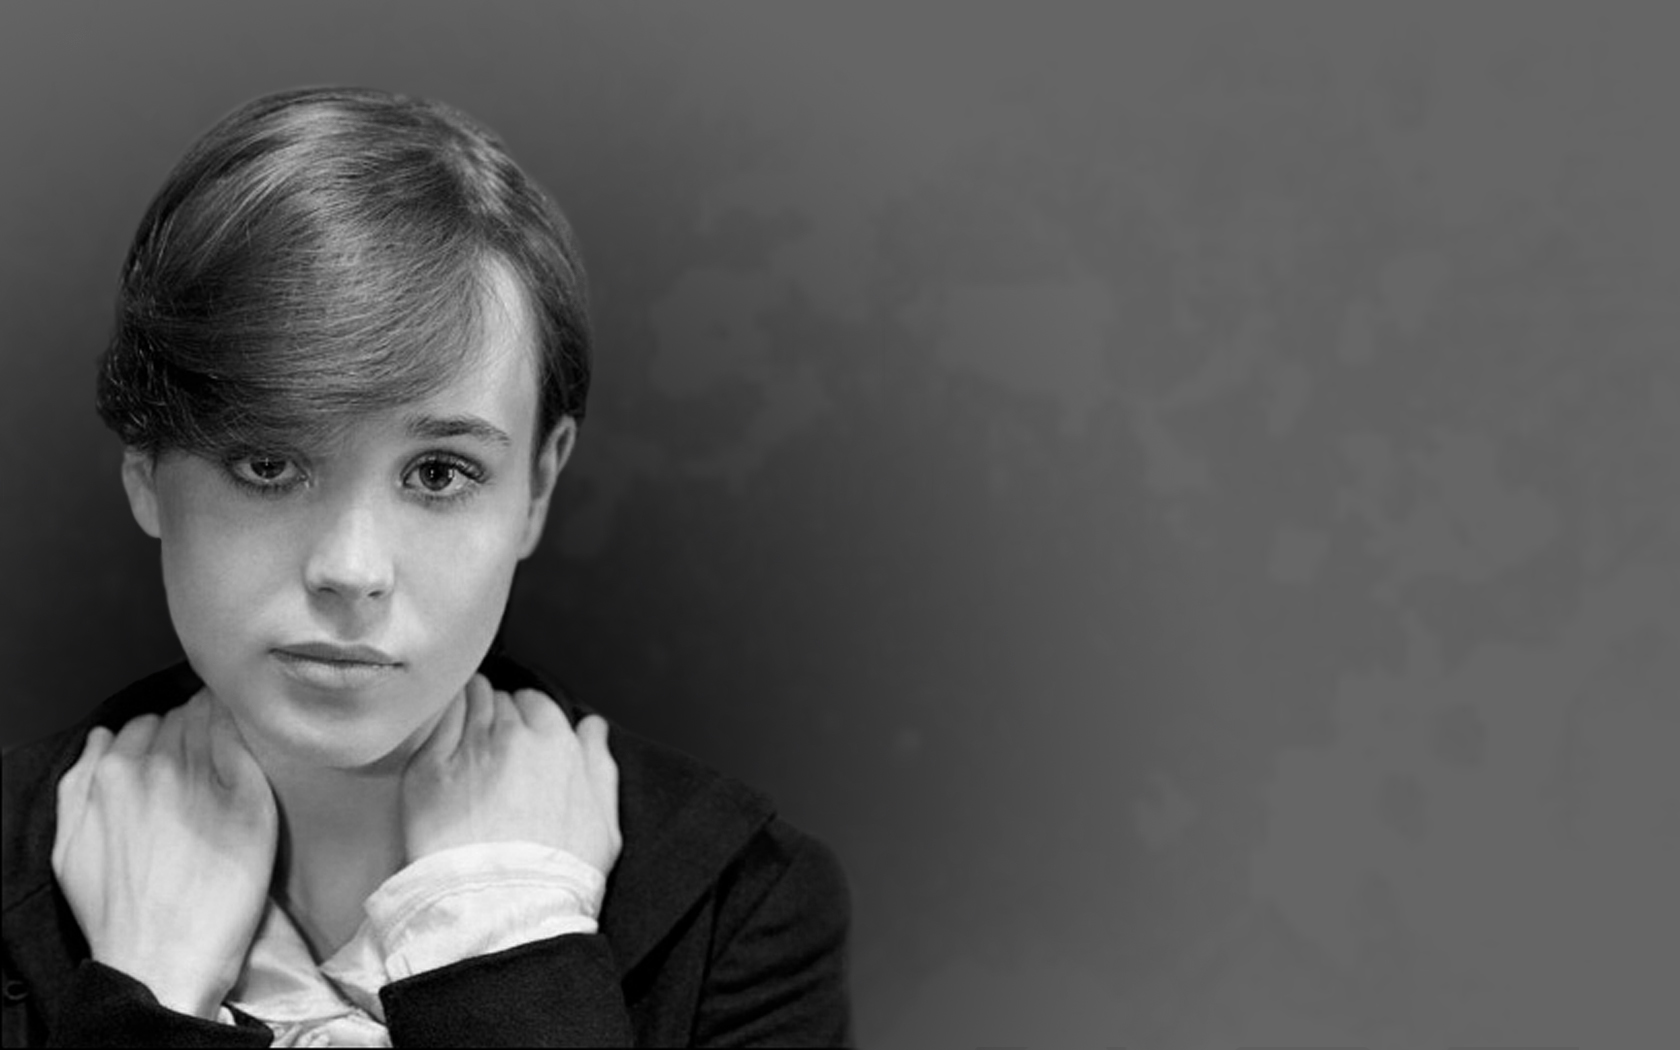 Ellen Page Wallpaper - Resolution:1680x1050 - ID:813490 - wallha.com